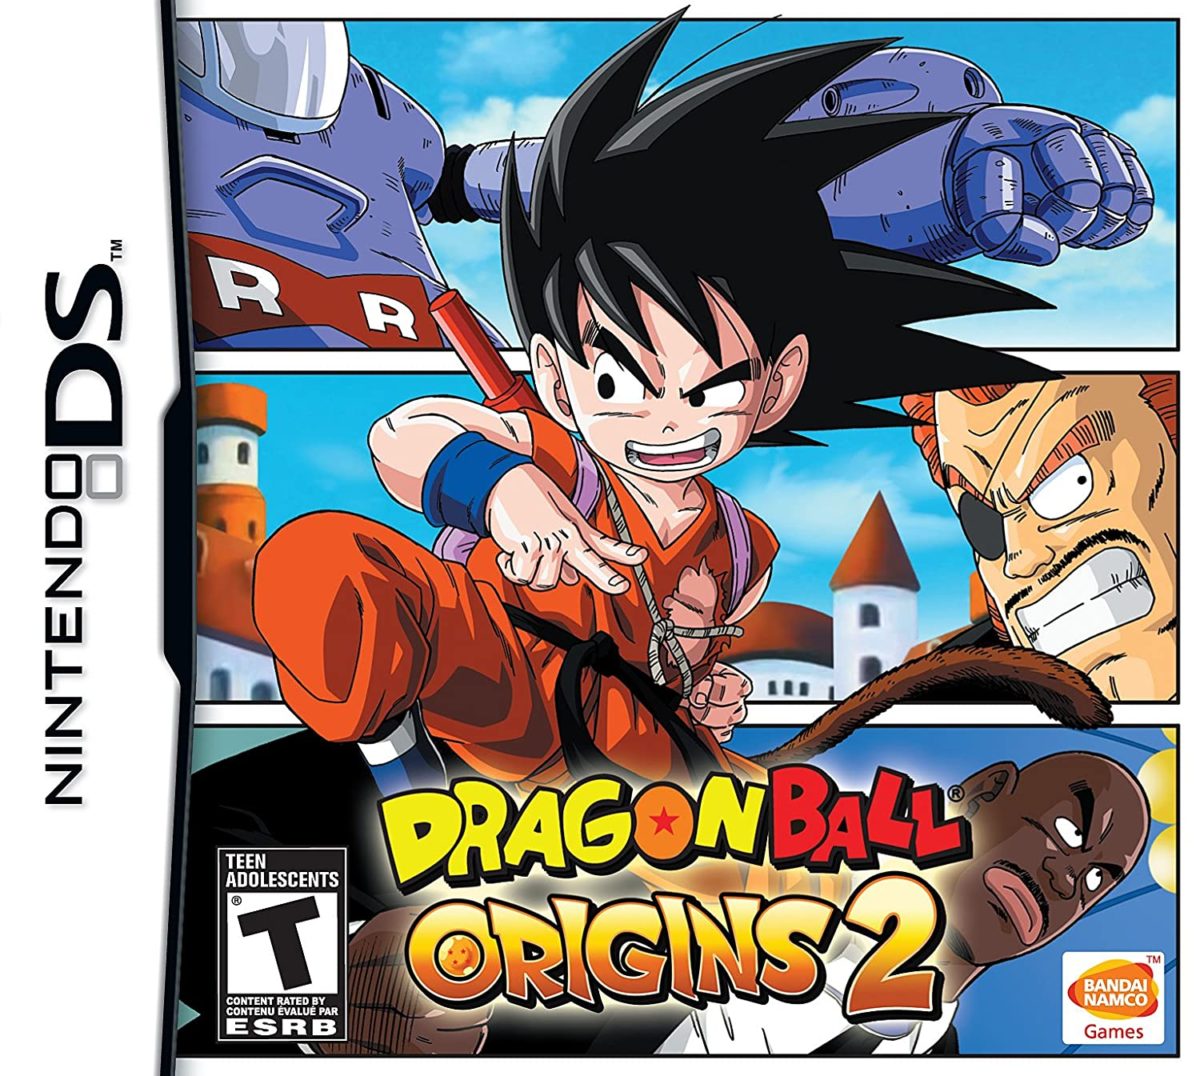 Dragon Ball: Origins 2 player count stats